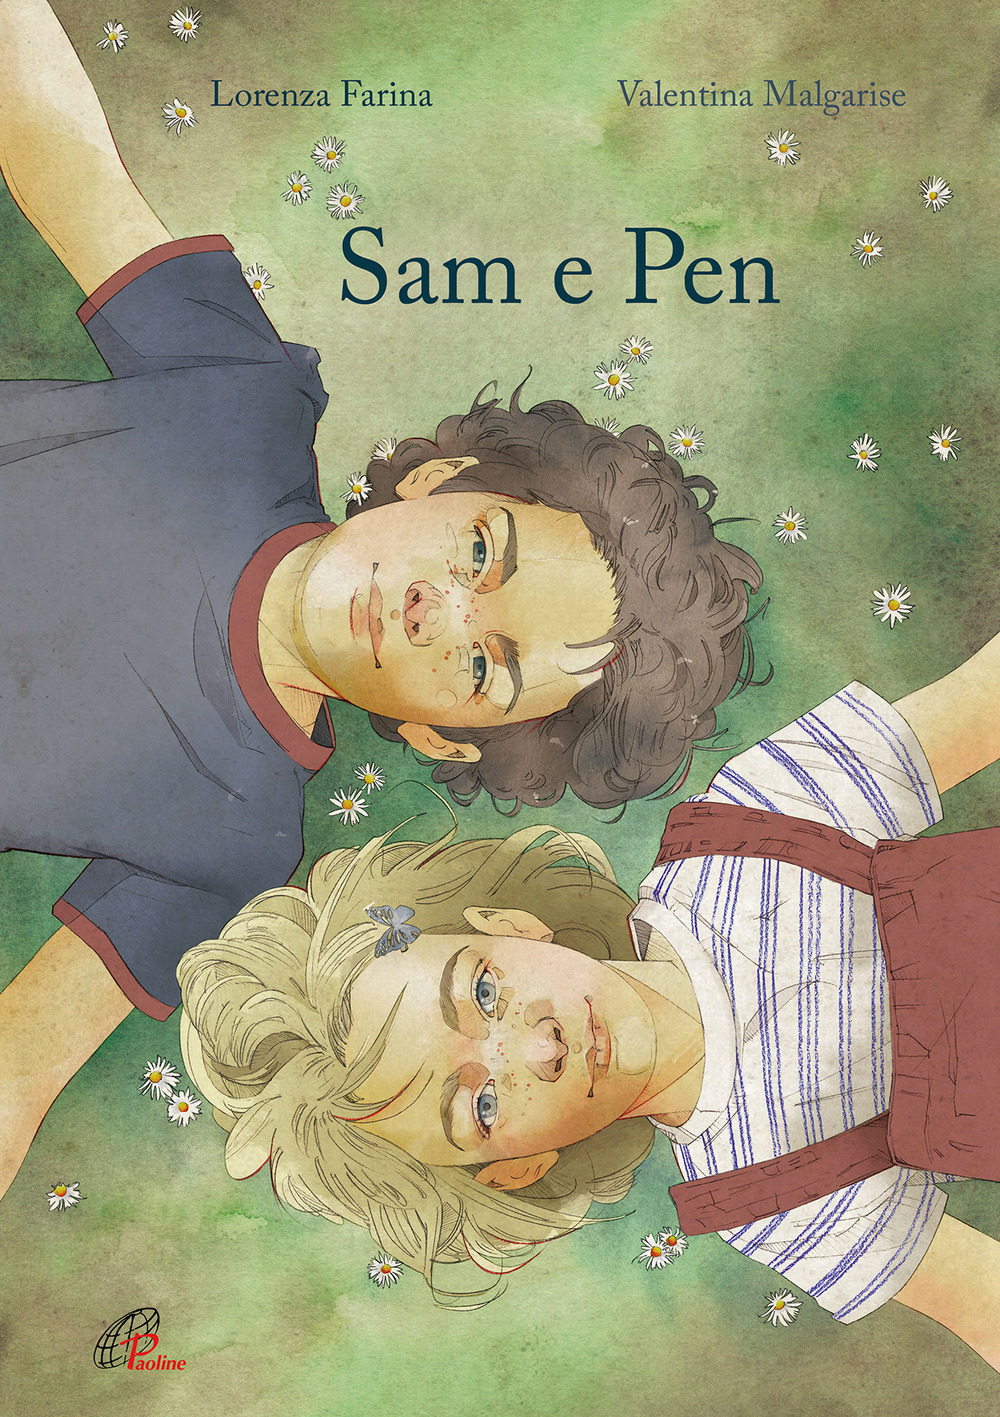 Sam e Pen